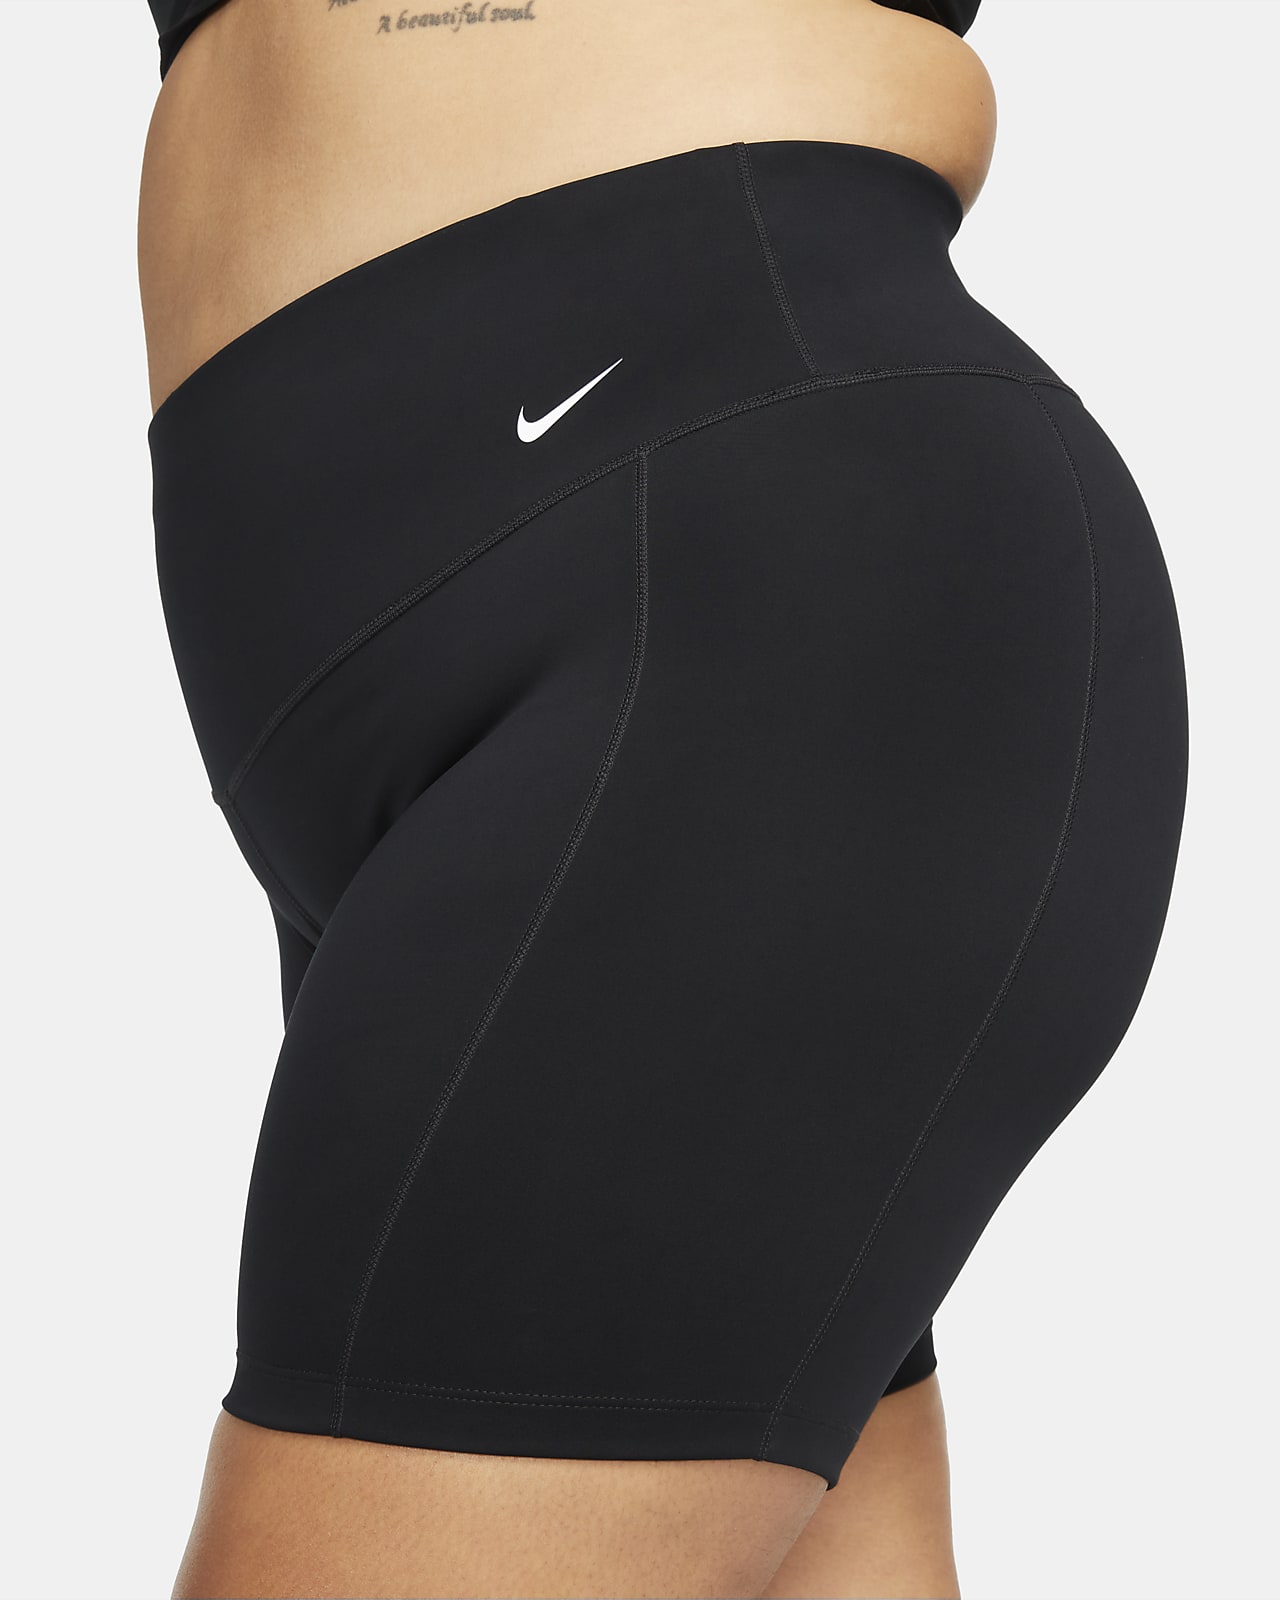 Nike Protection: Period Women's 7" Biker Shorts (Plus Size). Nike.com